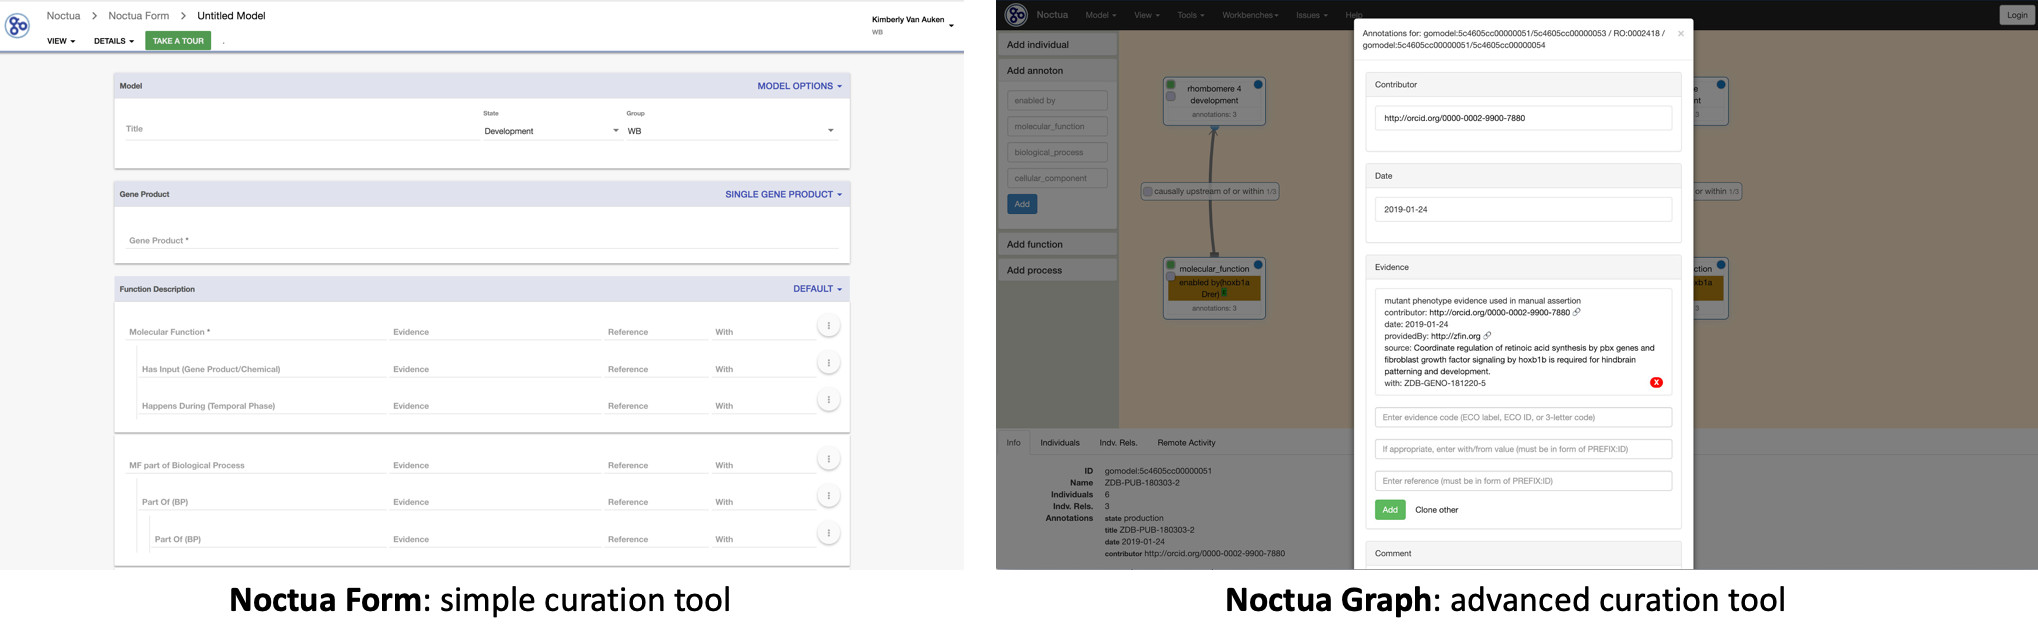 Noctua Curation Platform